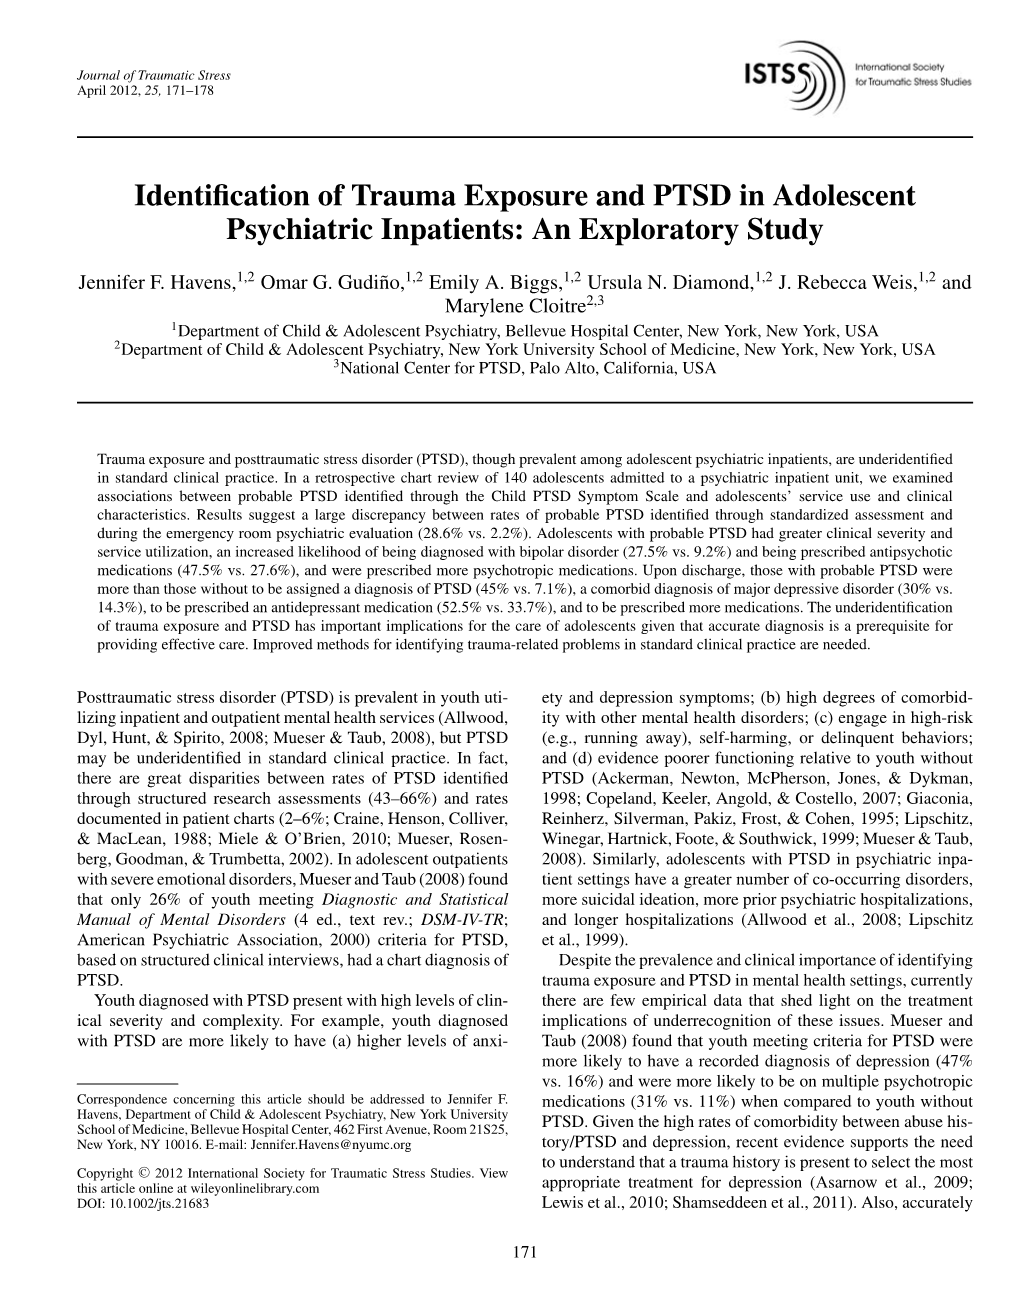 Identification of Trauma Exposure and PTSD In